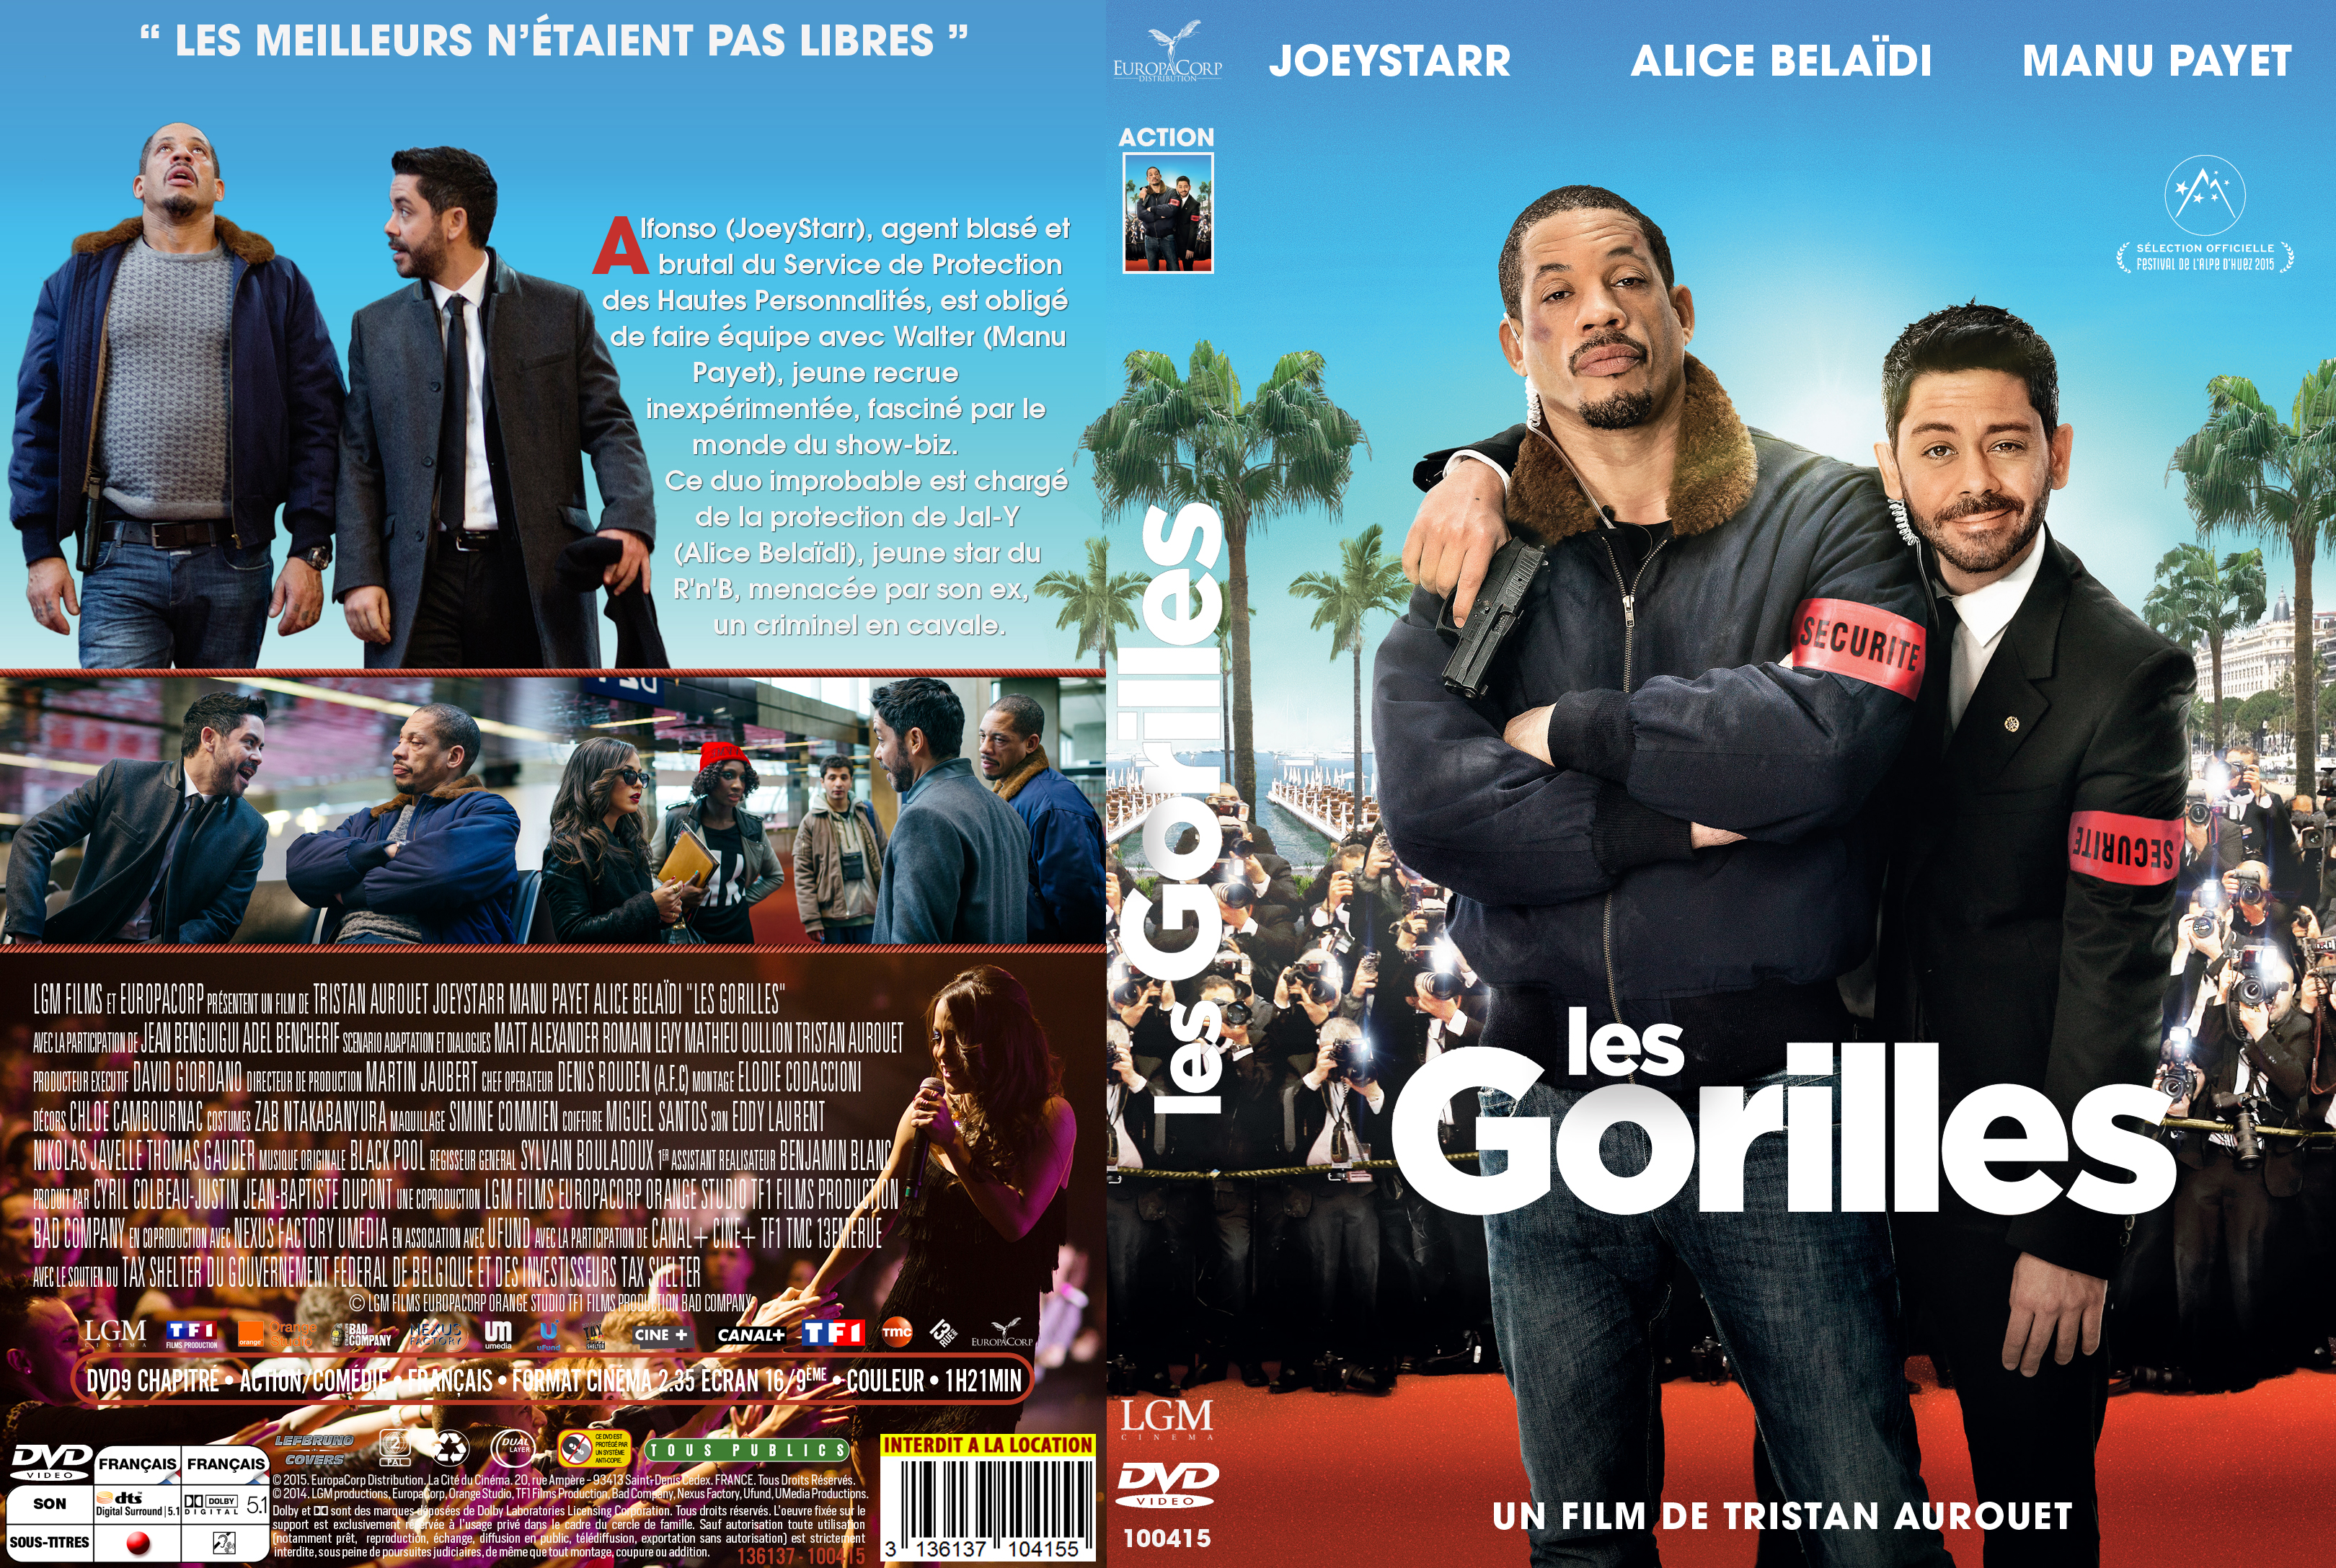 Jaquette DVD Les Gorilles (2015) custom